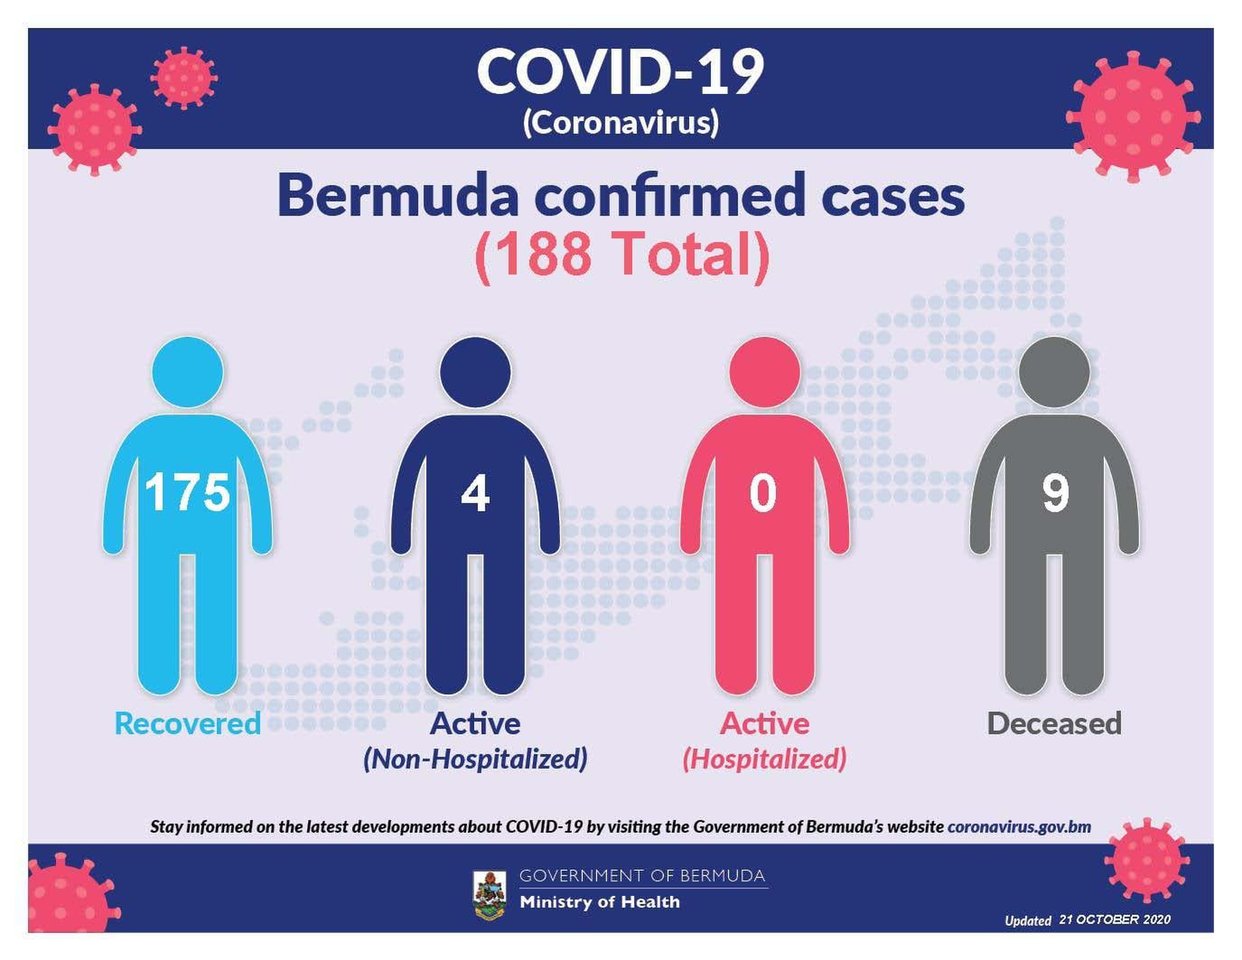 No new COVID-19 cases reported in Bermuda, 22 October